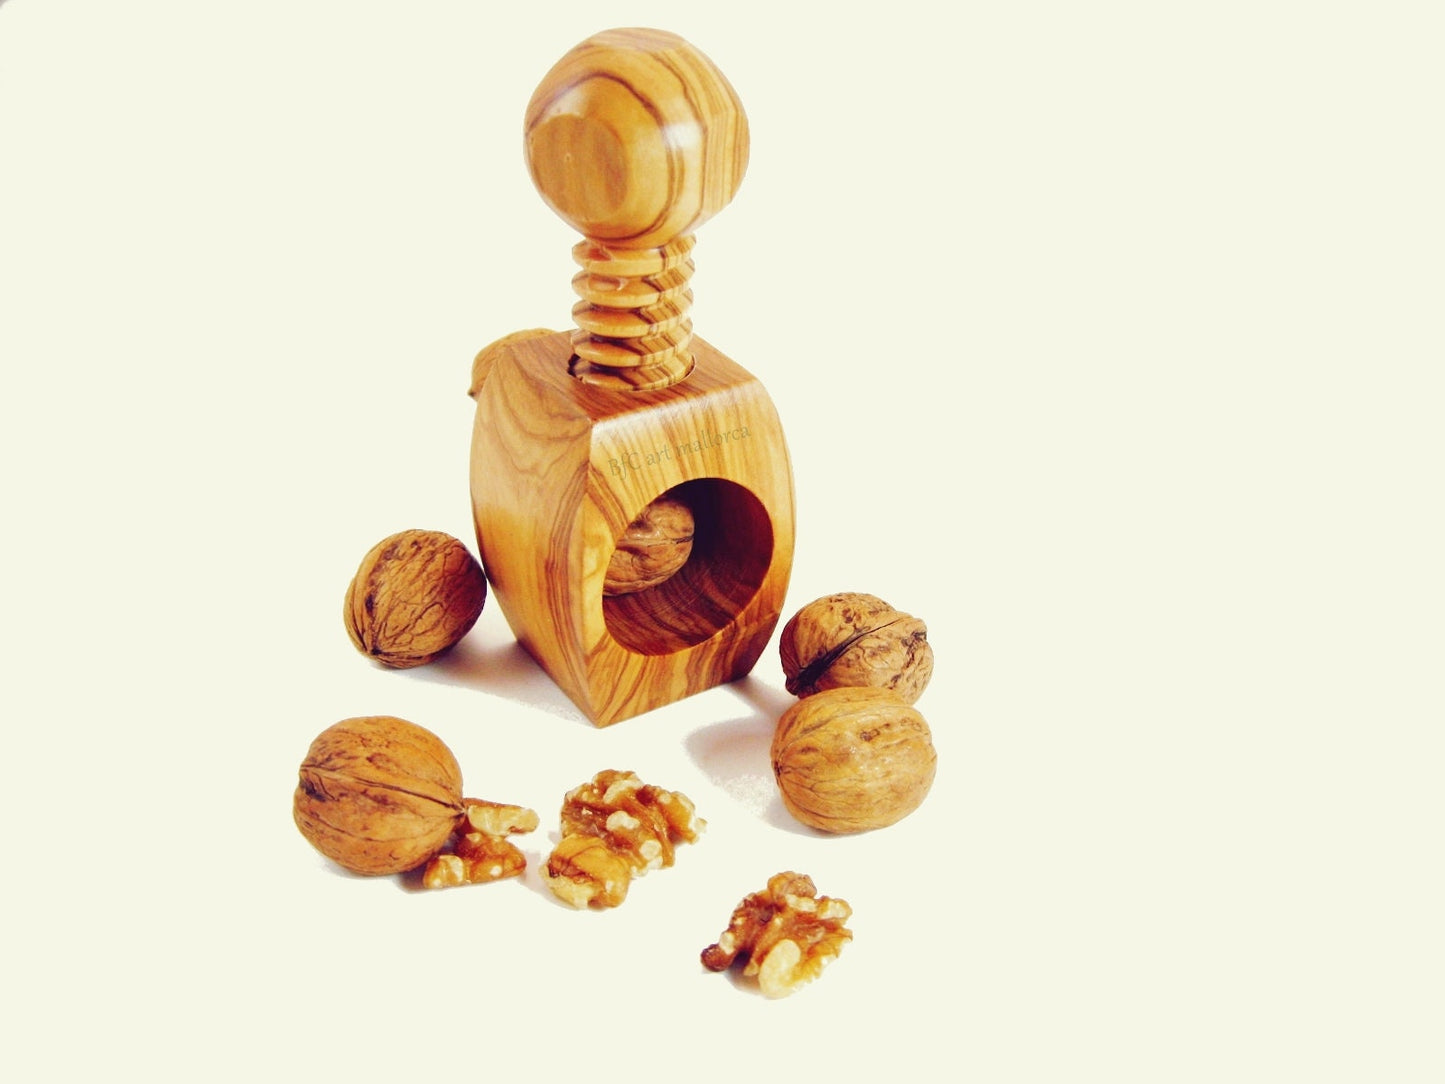 Nutbreaker Olive Wood, Wooden Nutcracker, Eco-friendly Nutcracker, Threaded Nutbreaker, Pressure Breaker Nutcracker, Turning Nutbreaker